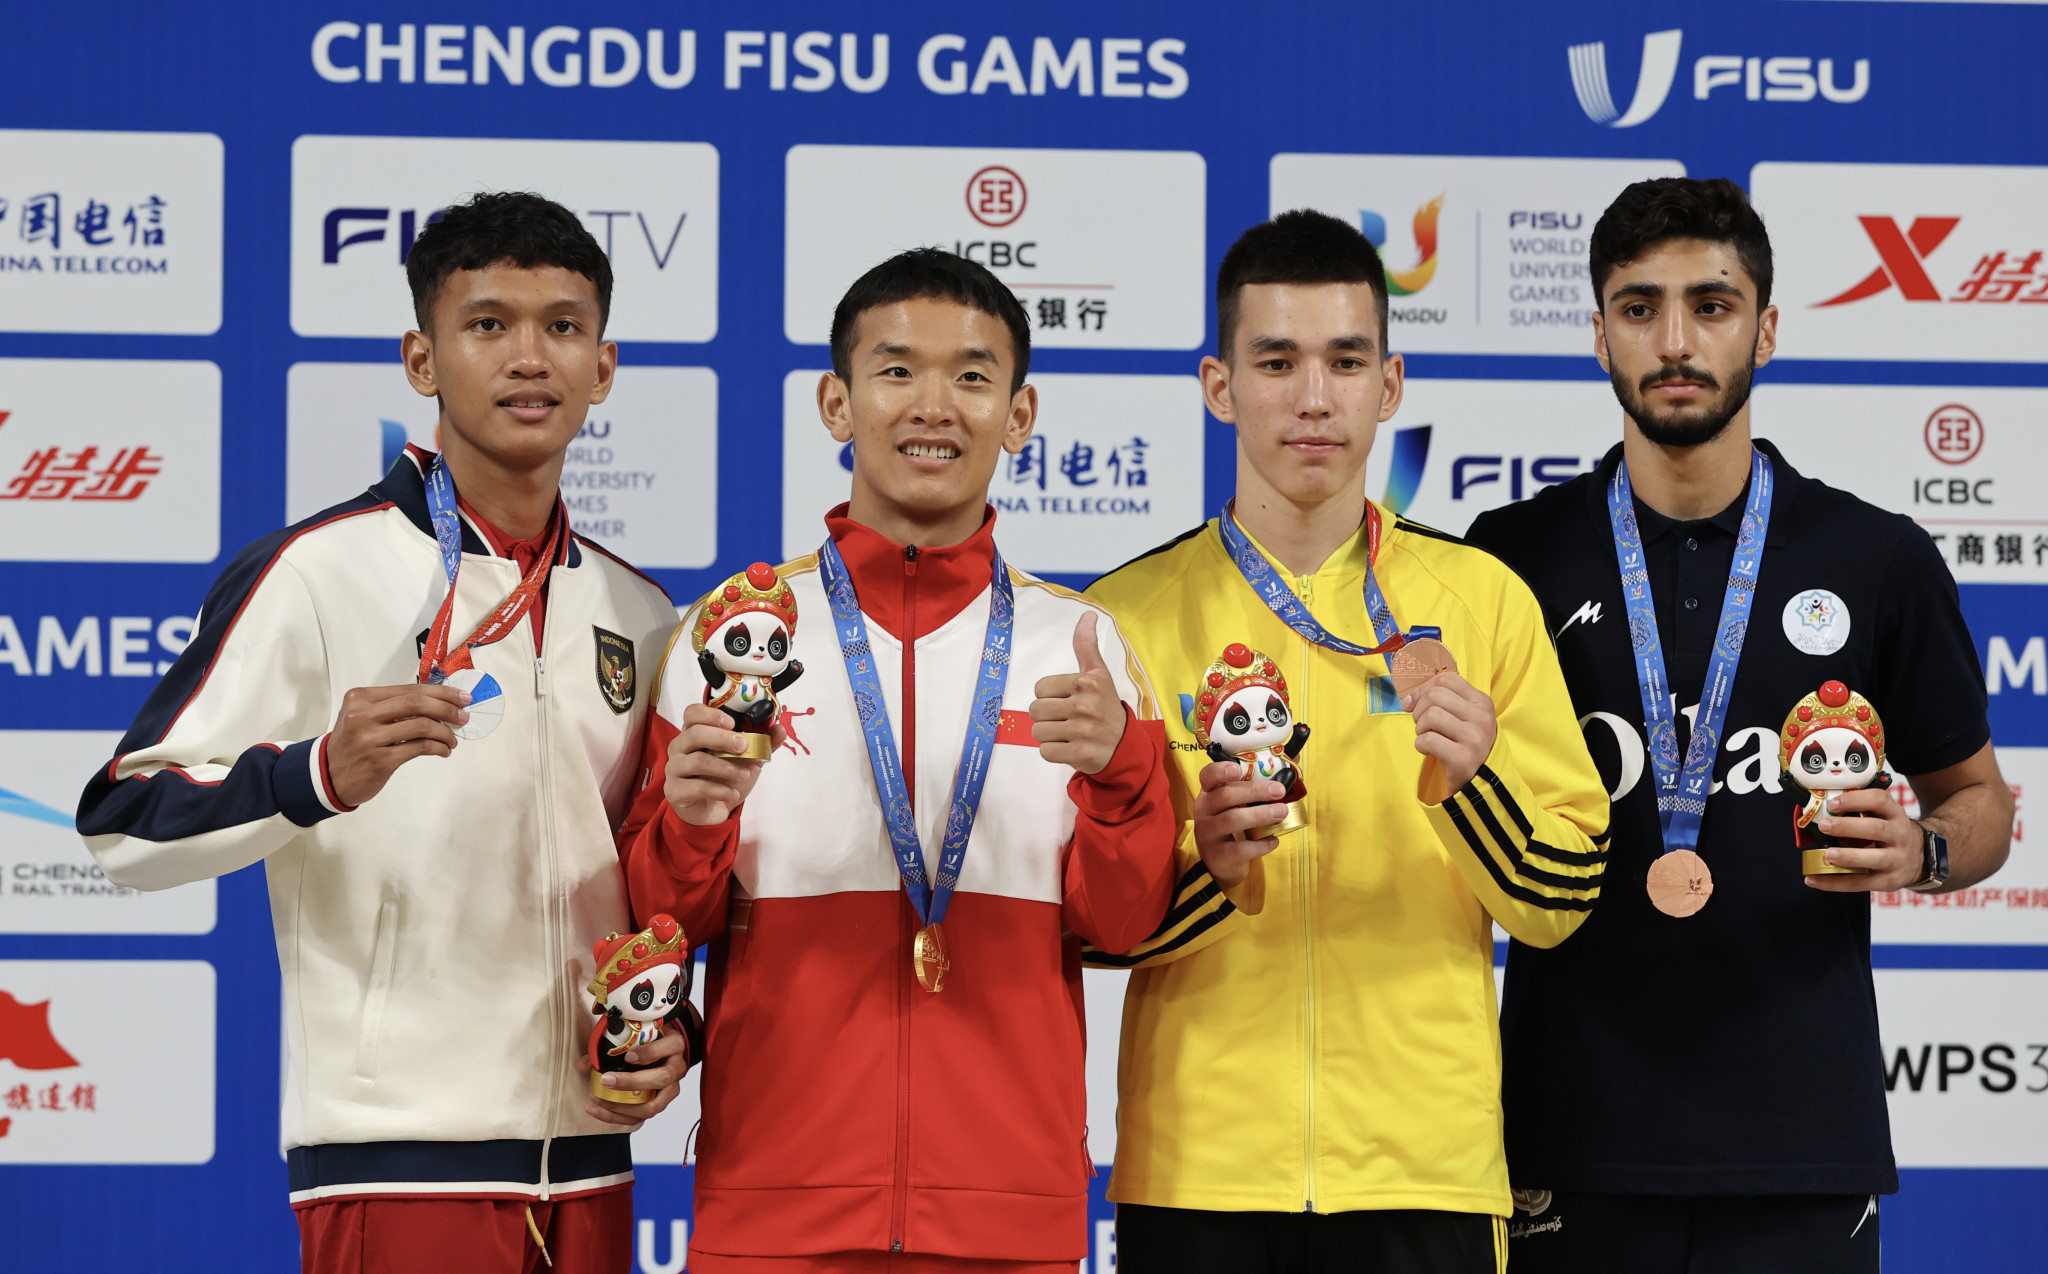 China's Ma Yigu, second left, got the better of Indonesia's Bintang Guitara, left, to claim the men's under-60kg wushu title ©Chengdu 2021